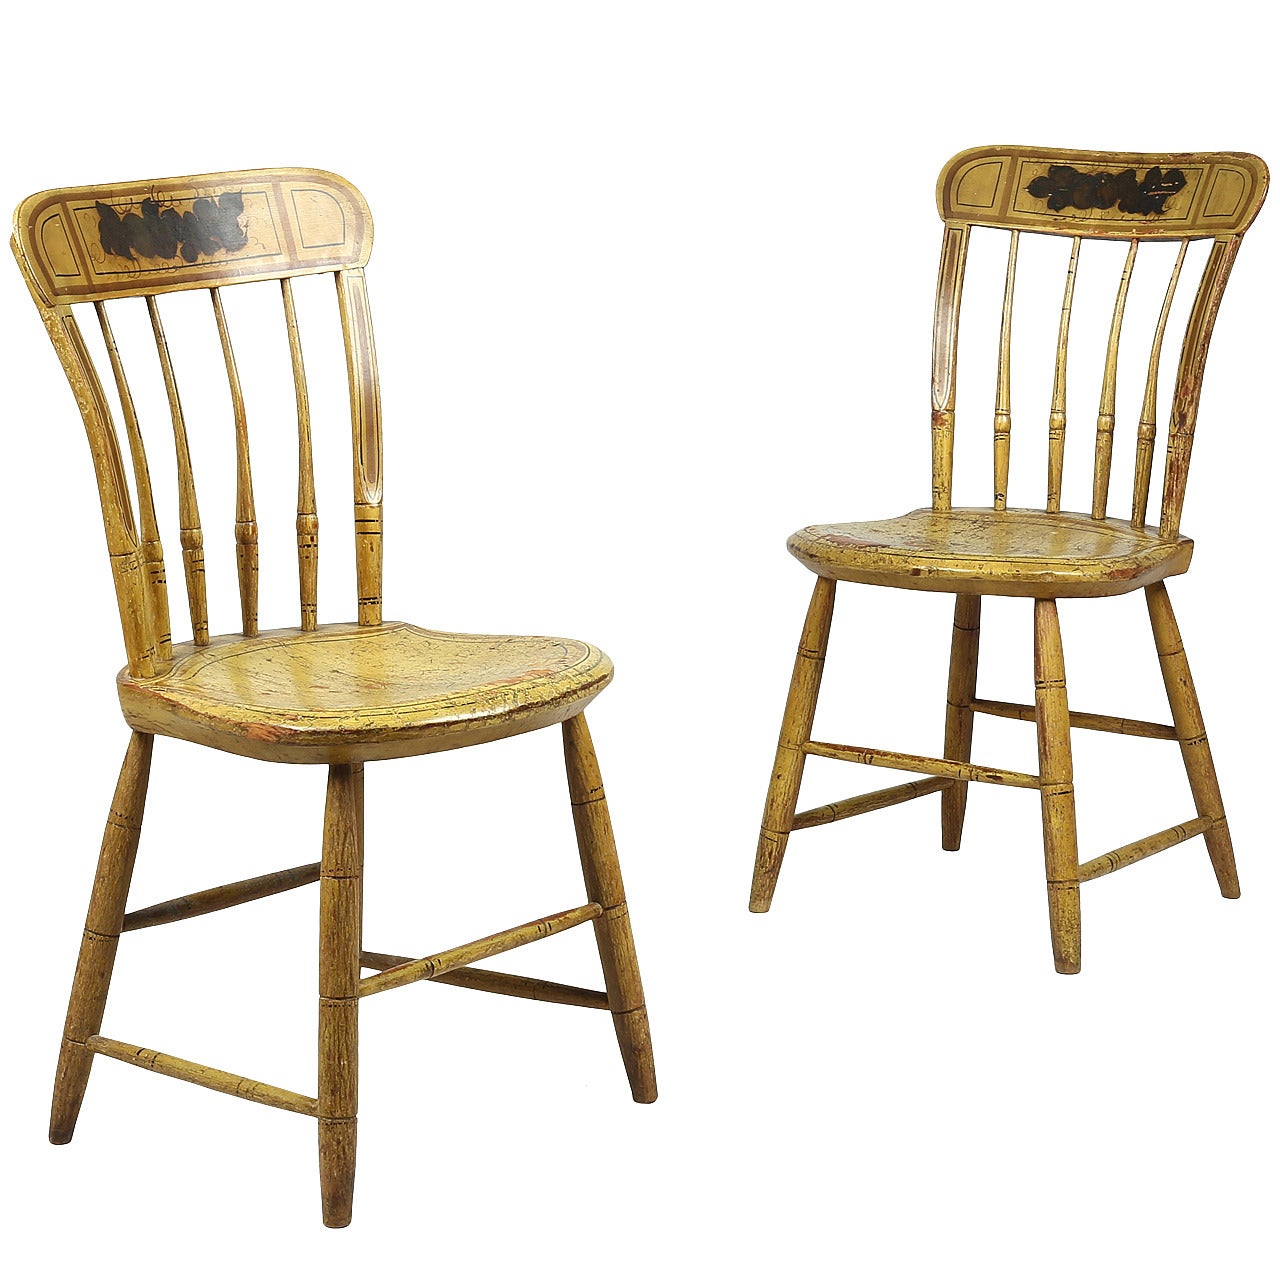 Pair of American Windsor Yellow Painted Side Chairs, Massachusetts, circa 1826